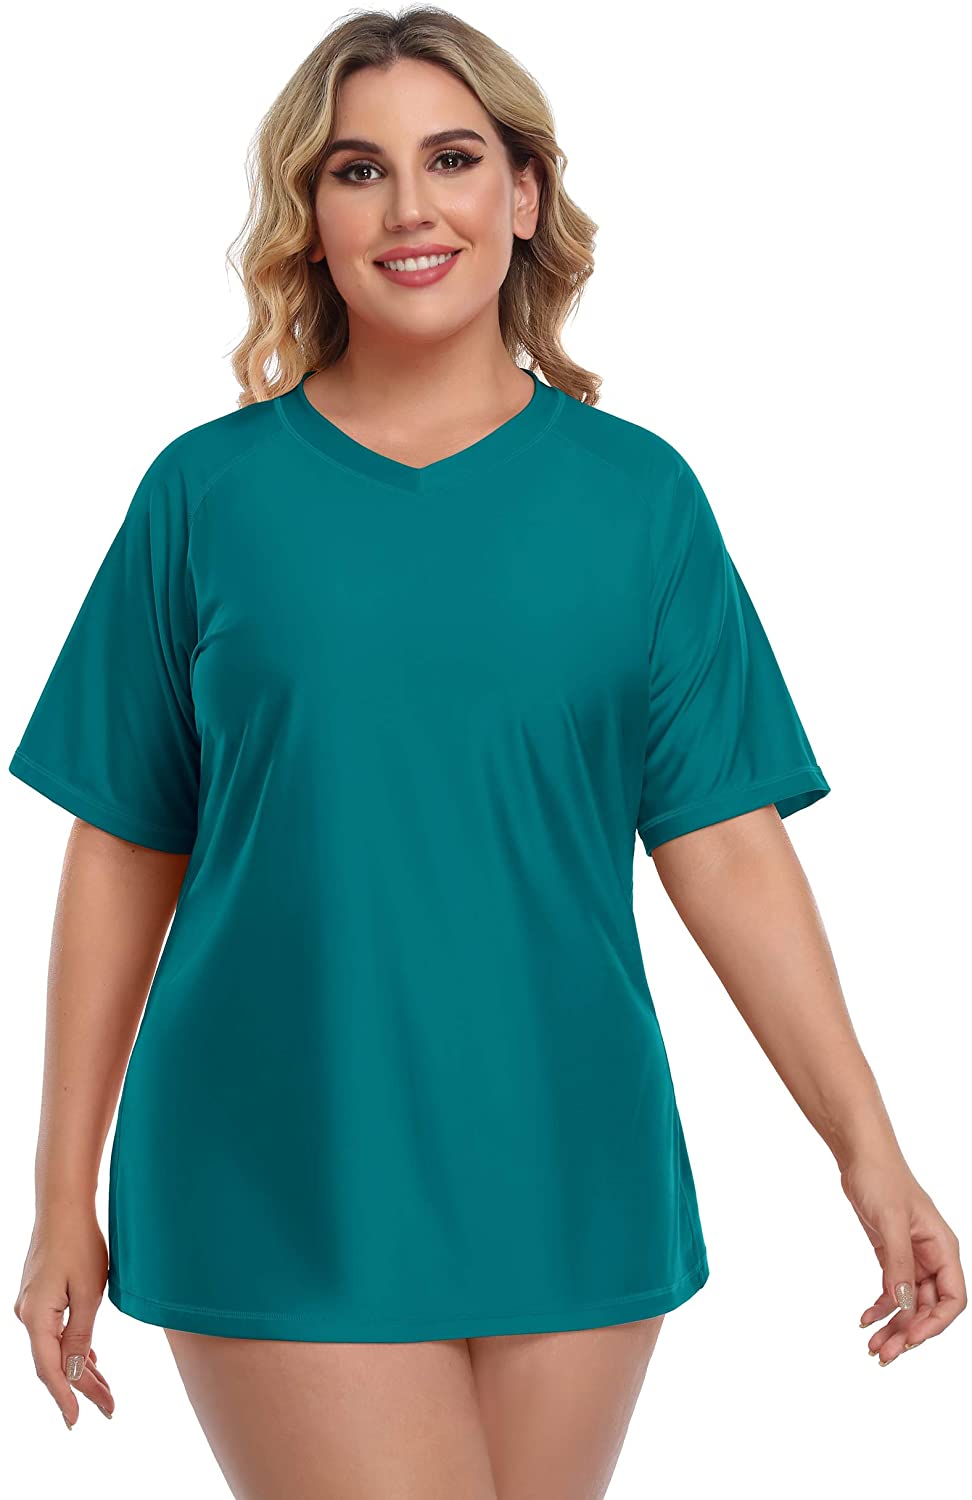 Serrated korrekt Landmand ATTRACO Women Plus Size Rash Guard Short Sleeve Rashguard UPF 50+ Swimming  Shirt | eBay